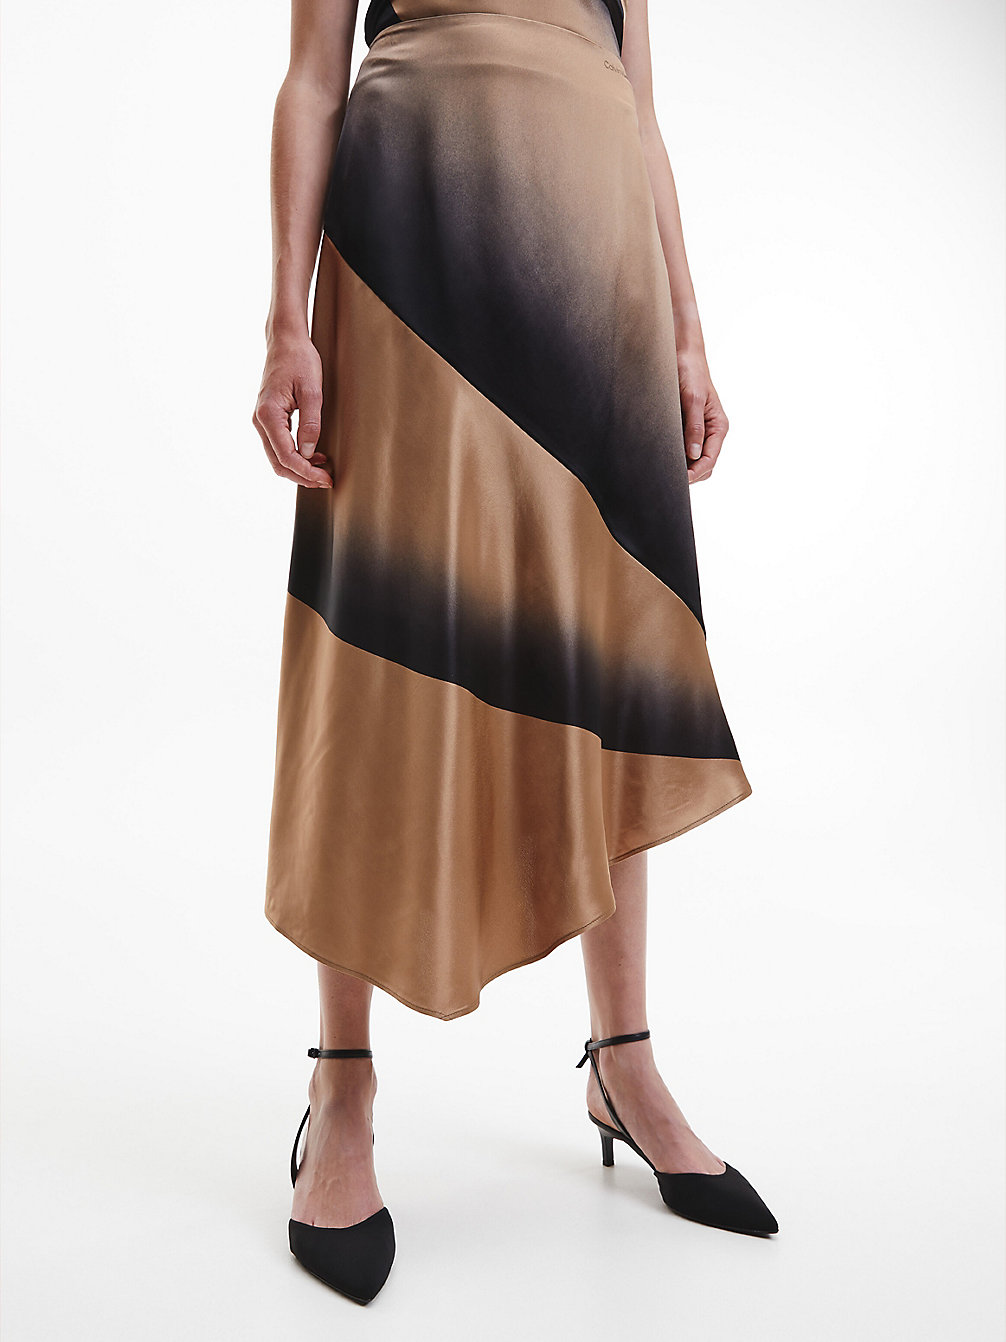 ARCHITECTURAL SPRAY / SAFARI CANVAS Shadow Print Asymmetric Skirt undefined women Calvin Klein